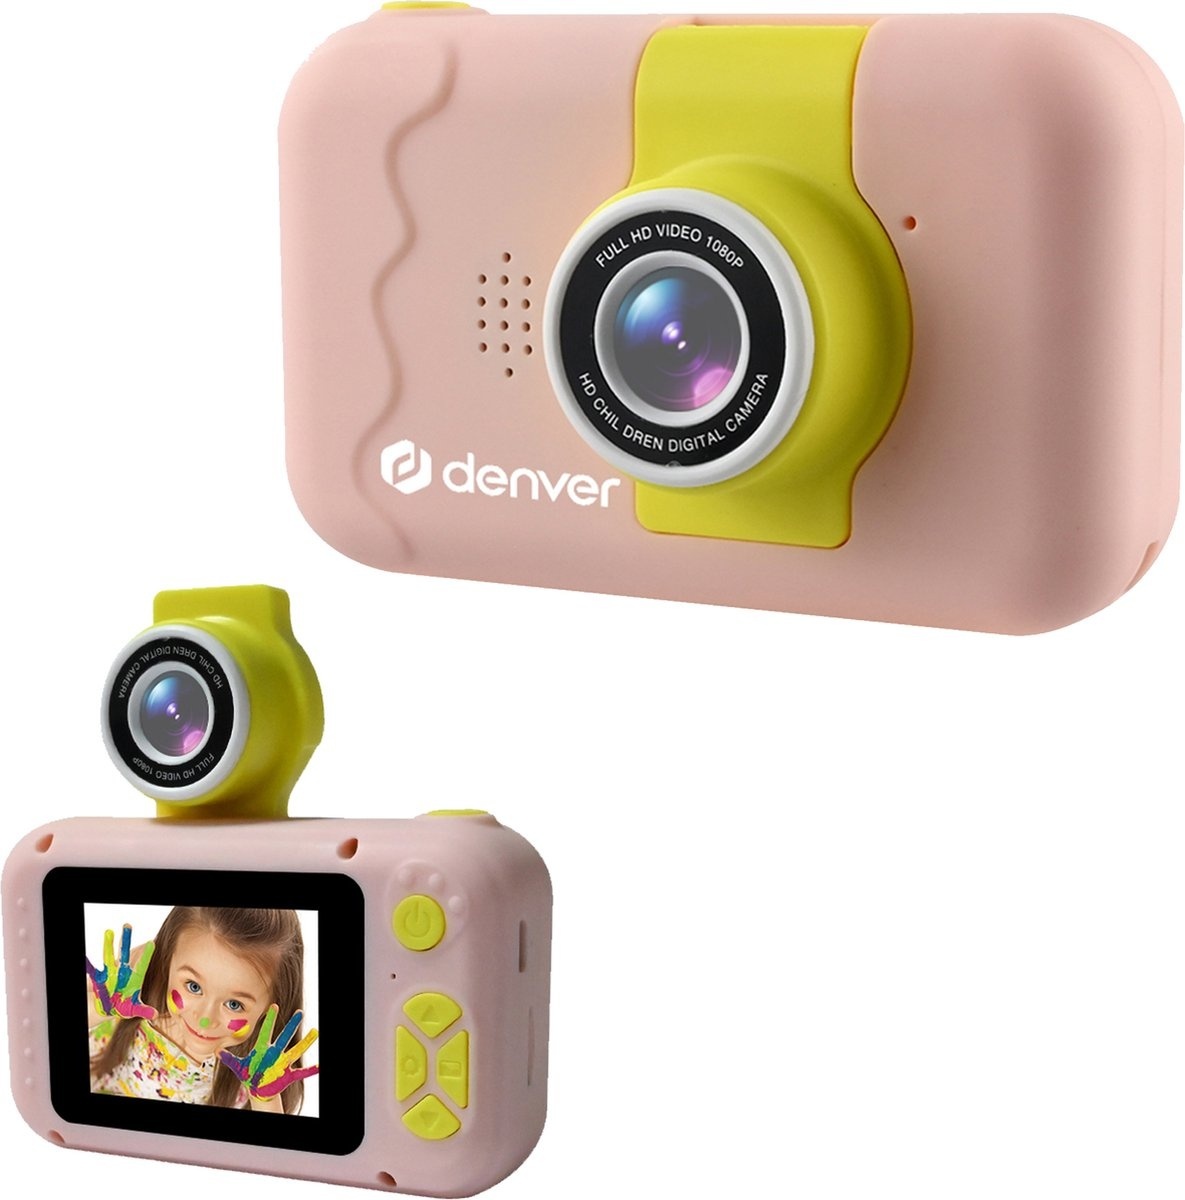 40 Kinder günstig Kaufen-Denver Kinderkamera - 2 in 1 Kamera - Flip-Objektiv für Selfies - 40MP - FULL HD - Spielzeugkamera - KCA1350 - Pink. Denver Kinderkamera - 2 in 1 Kamera - Flip-Objektiv für Selfies - 40MP - FULL HD - Spielzeugkamera - KCA1350 - Pink <![CDATA[Fot